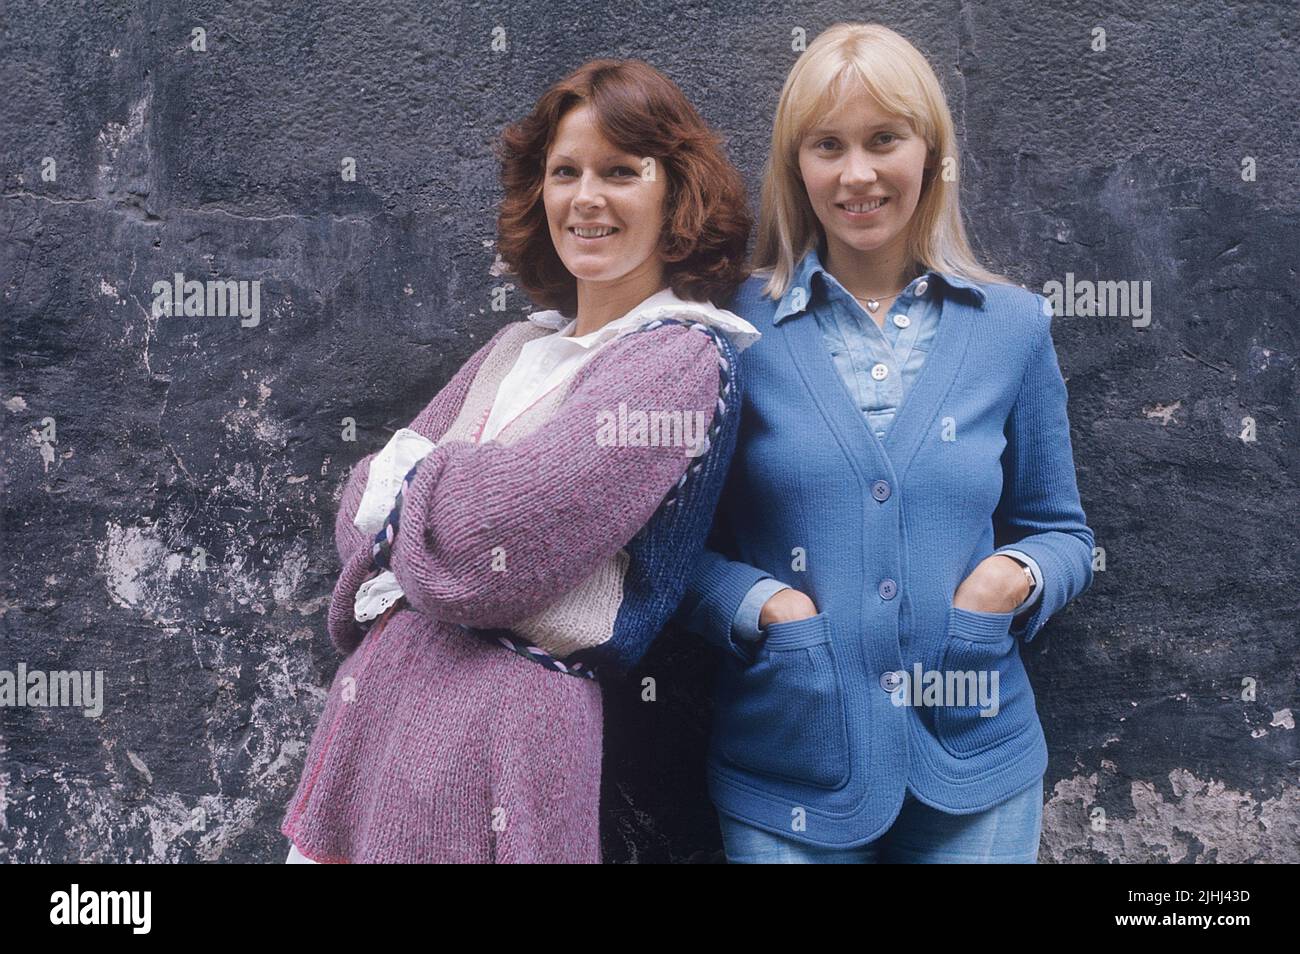 ABBA. Anni-Frid Lyngstad and Agnetha Fältskog in the 1970s Stock Photo